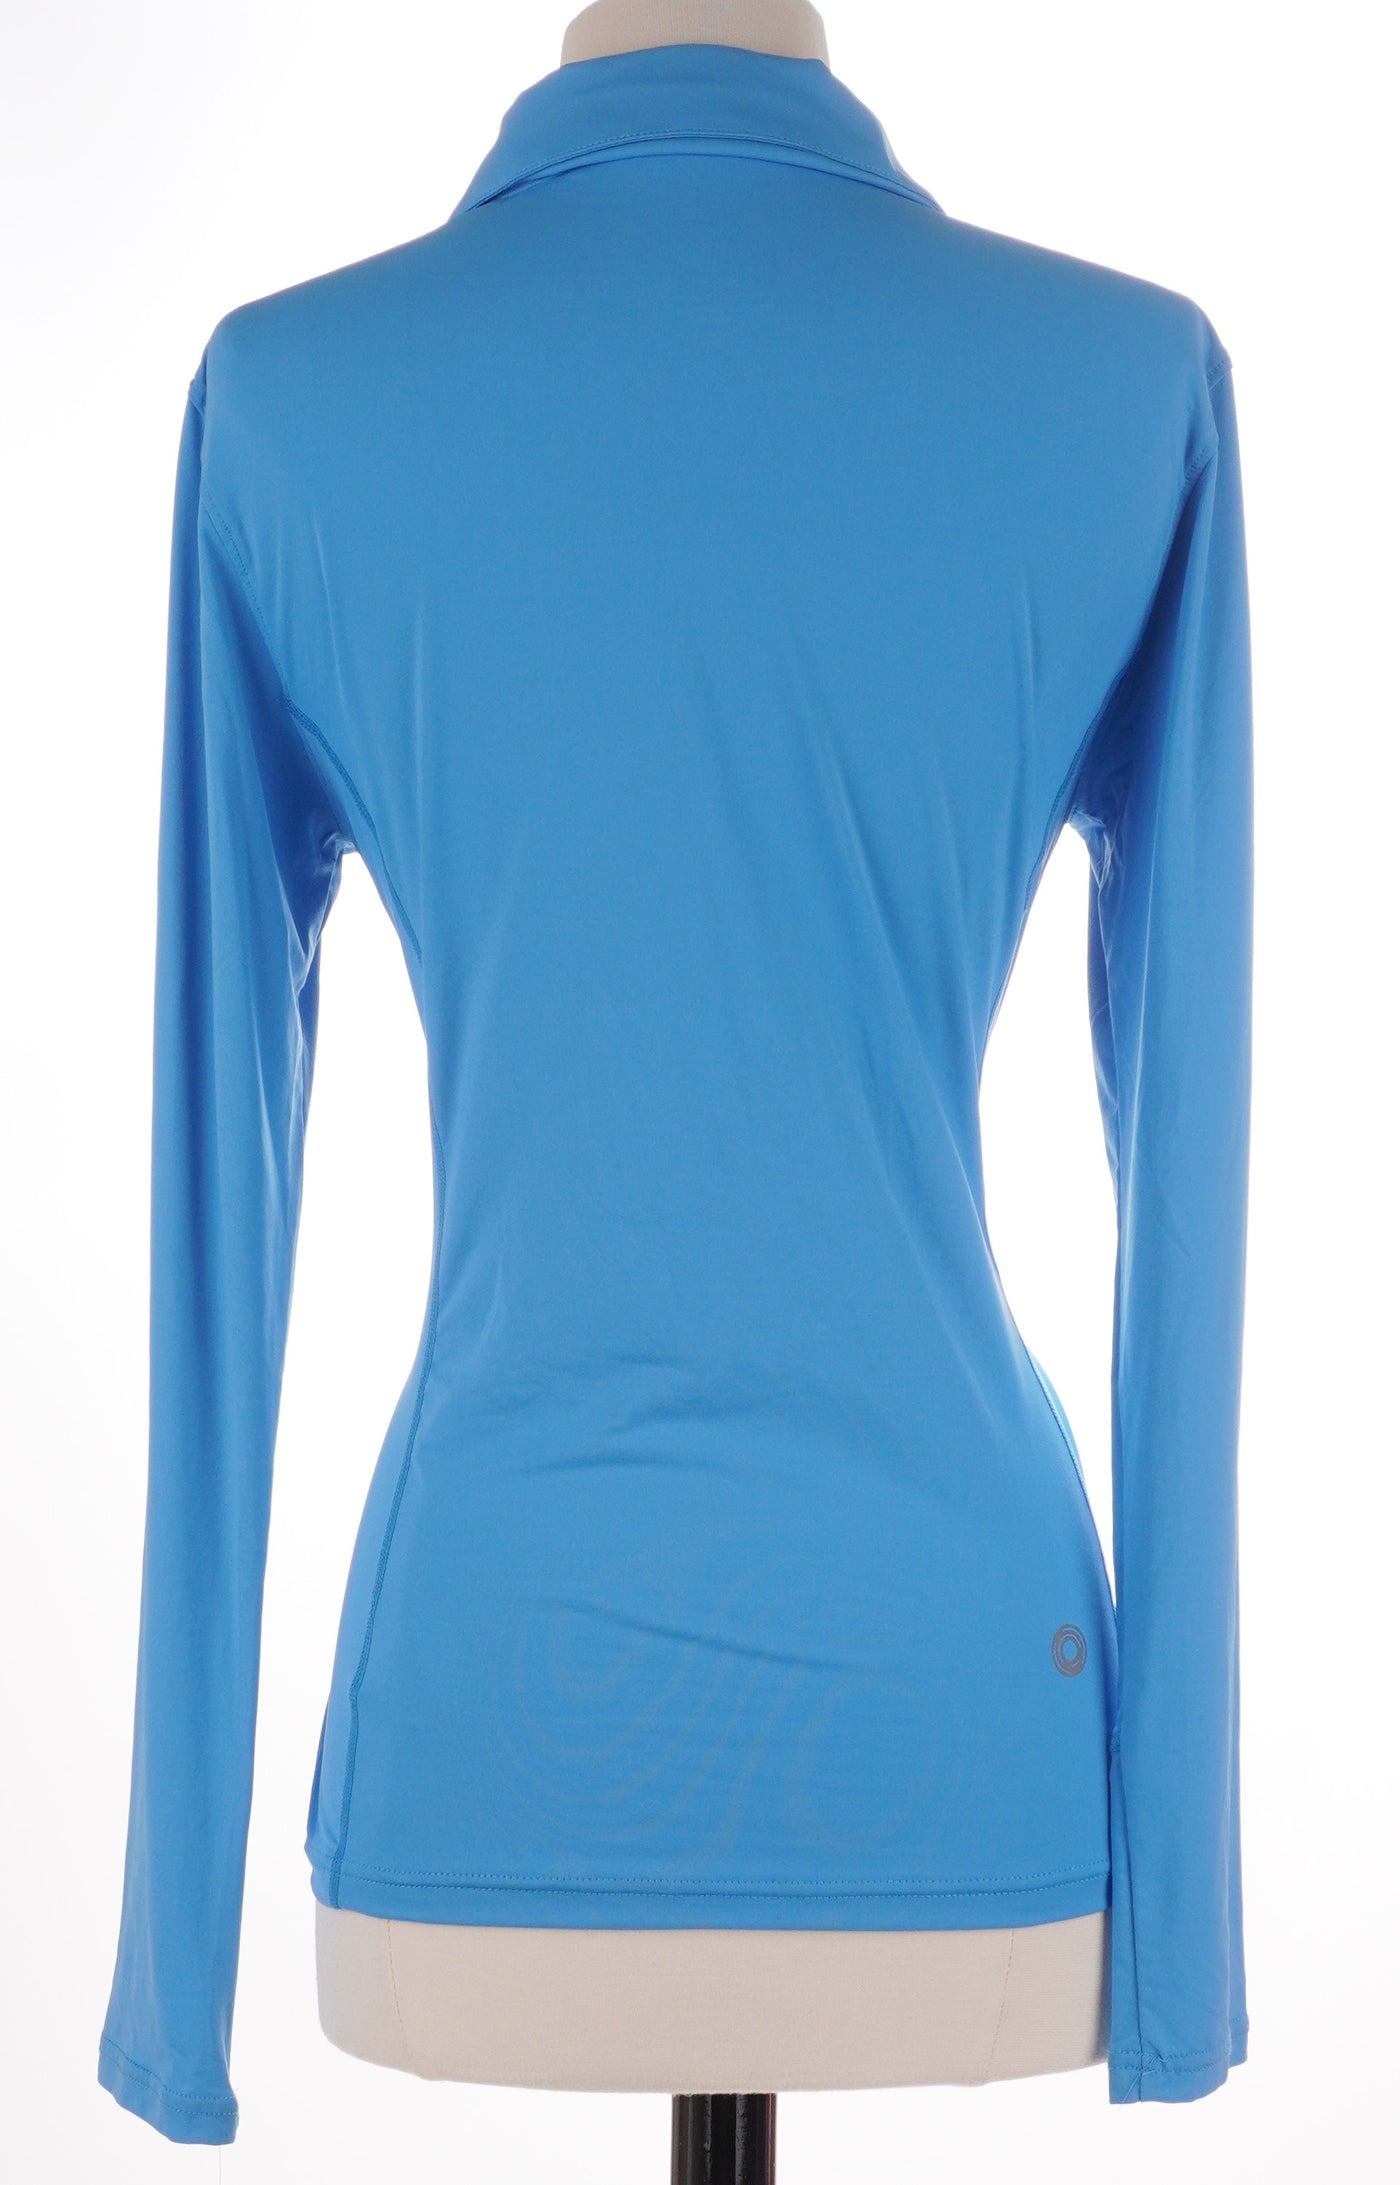 Bloq UV Long Sleeve Top - Blue - Size Small - Skorzie